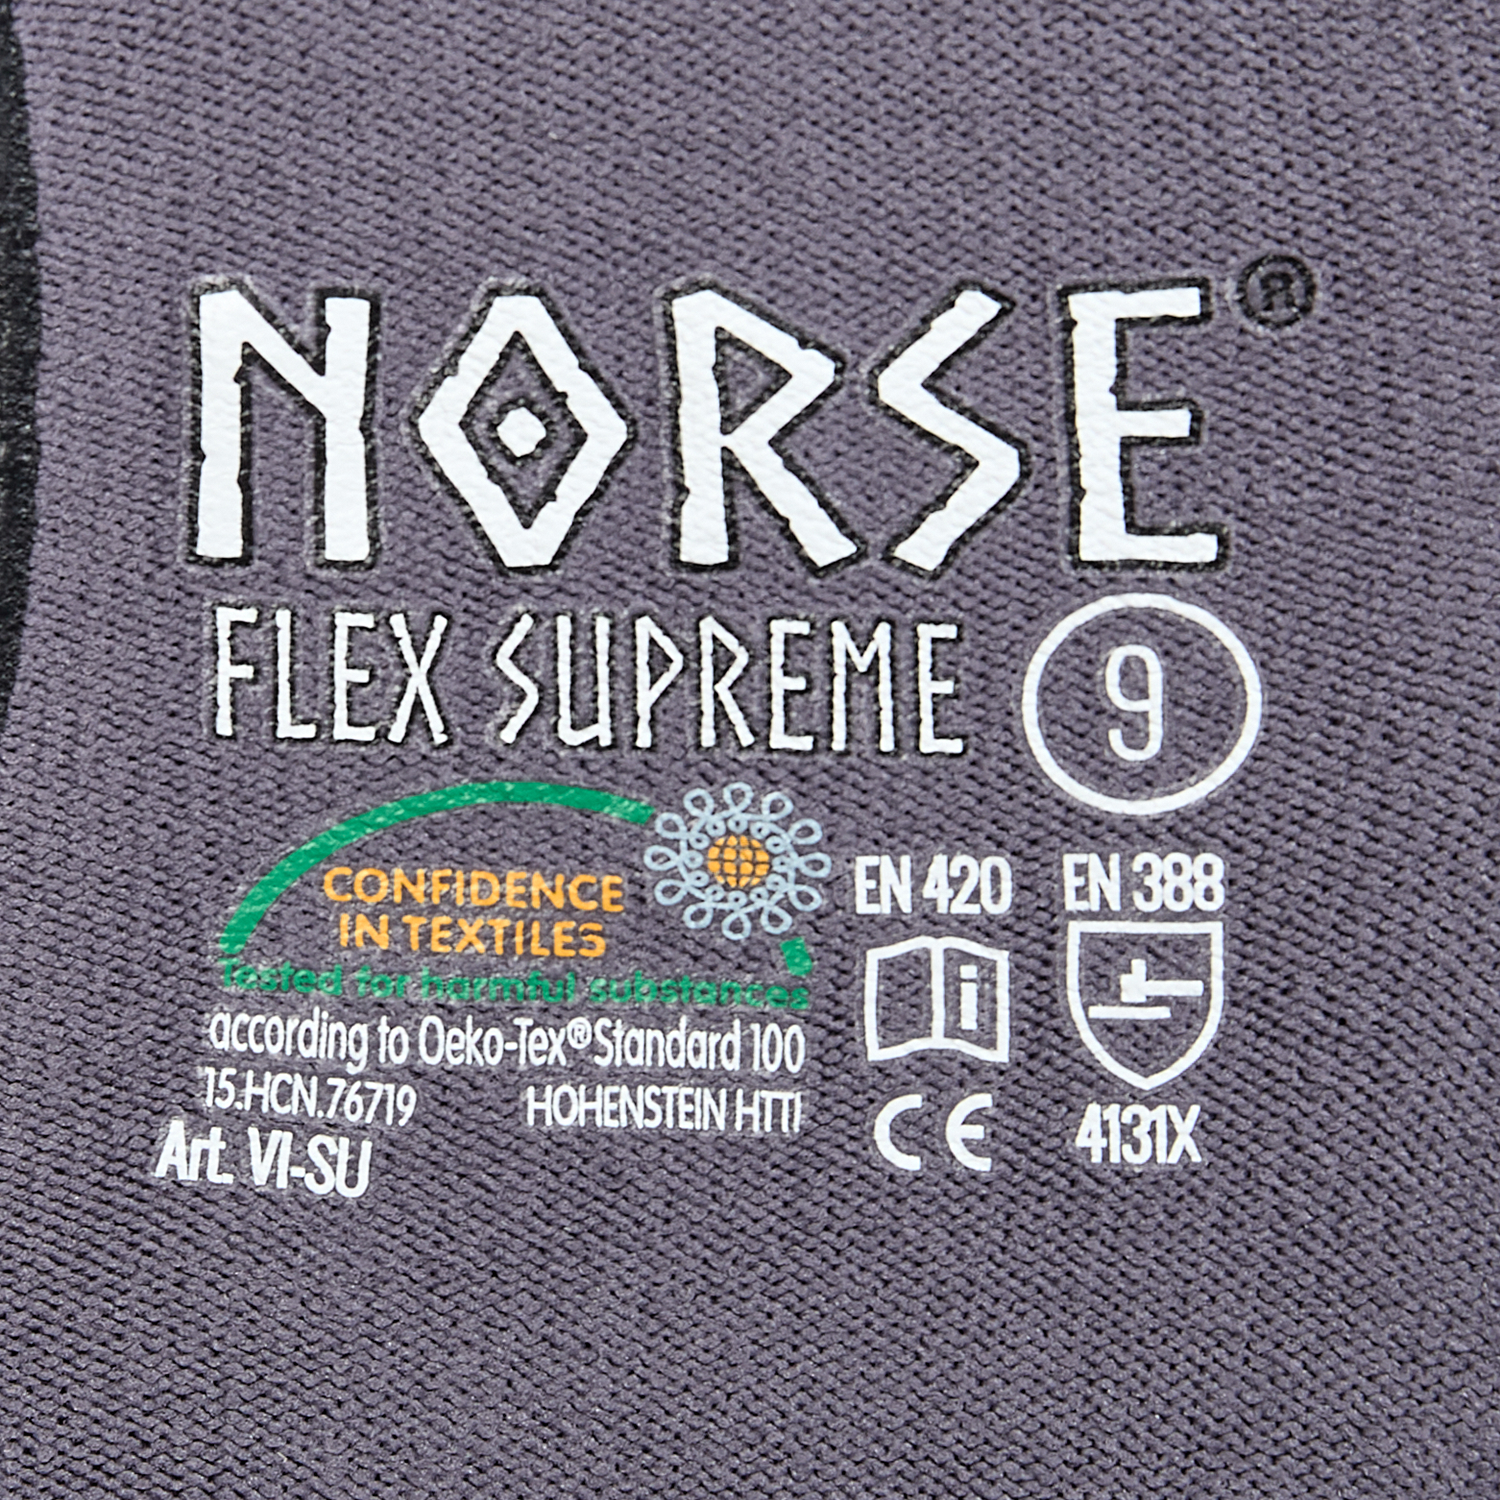 NORSE Flex Supreme assembly gloves size 6